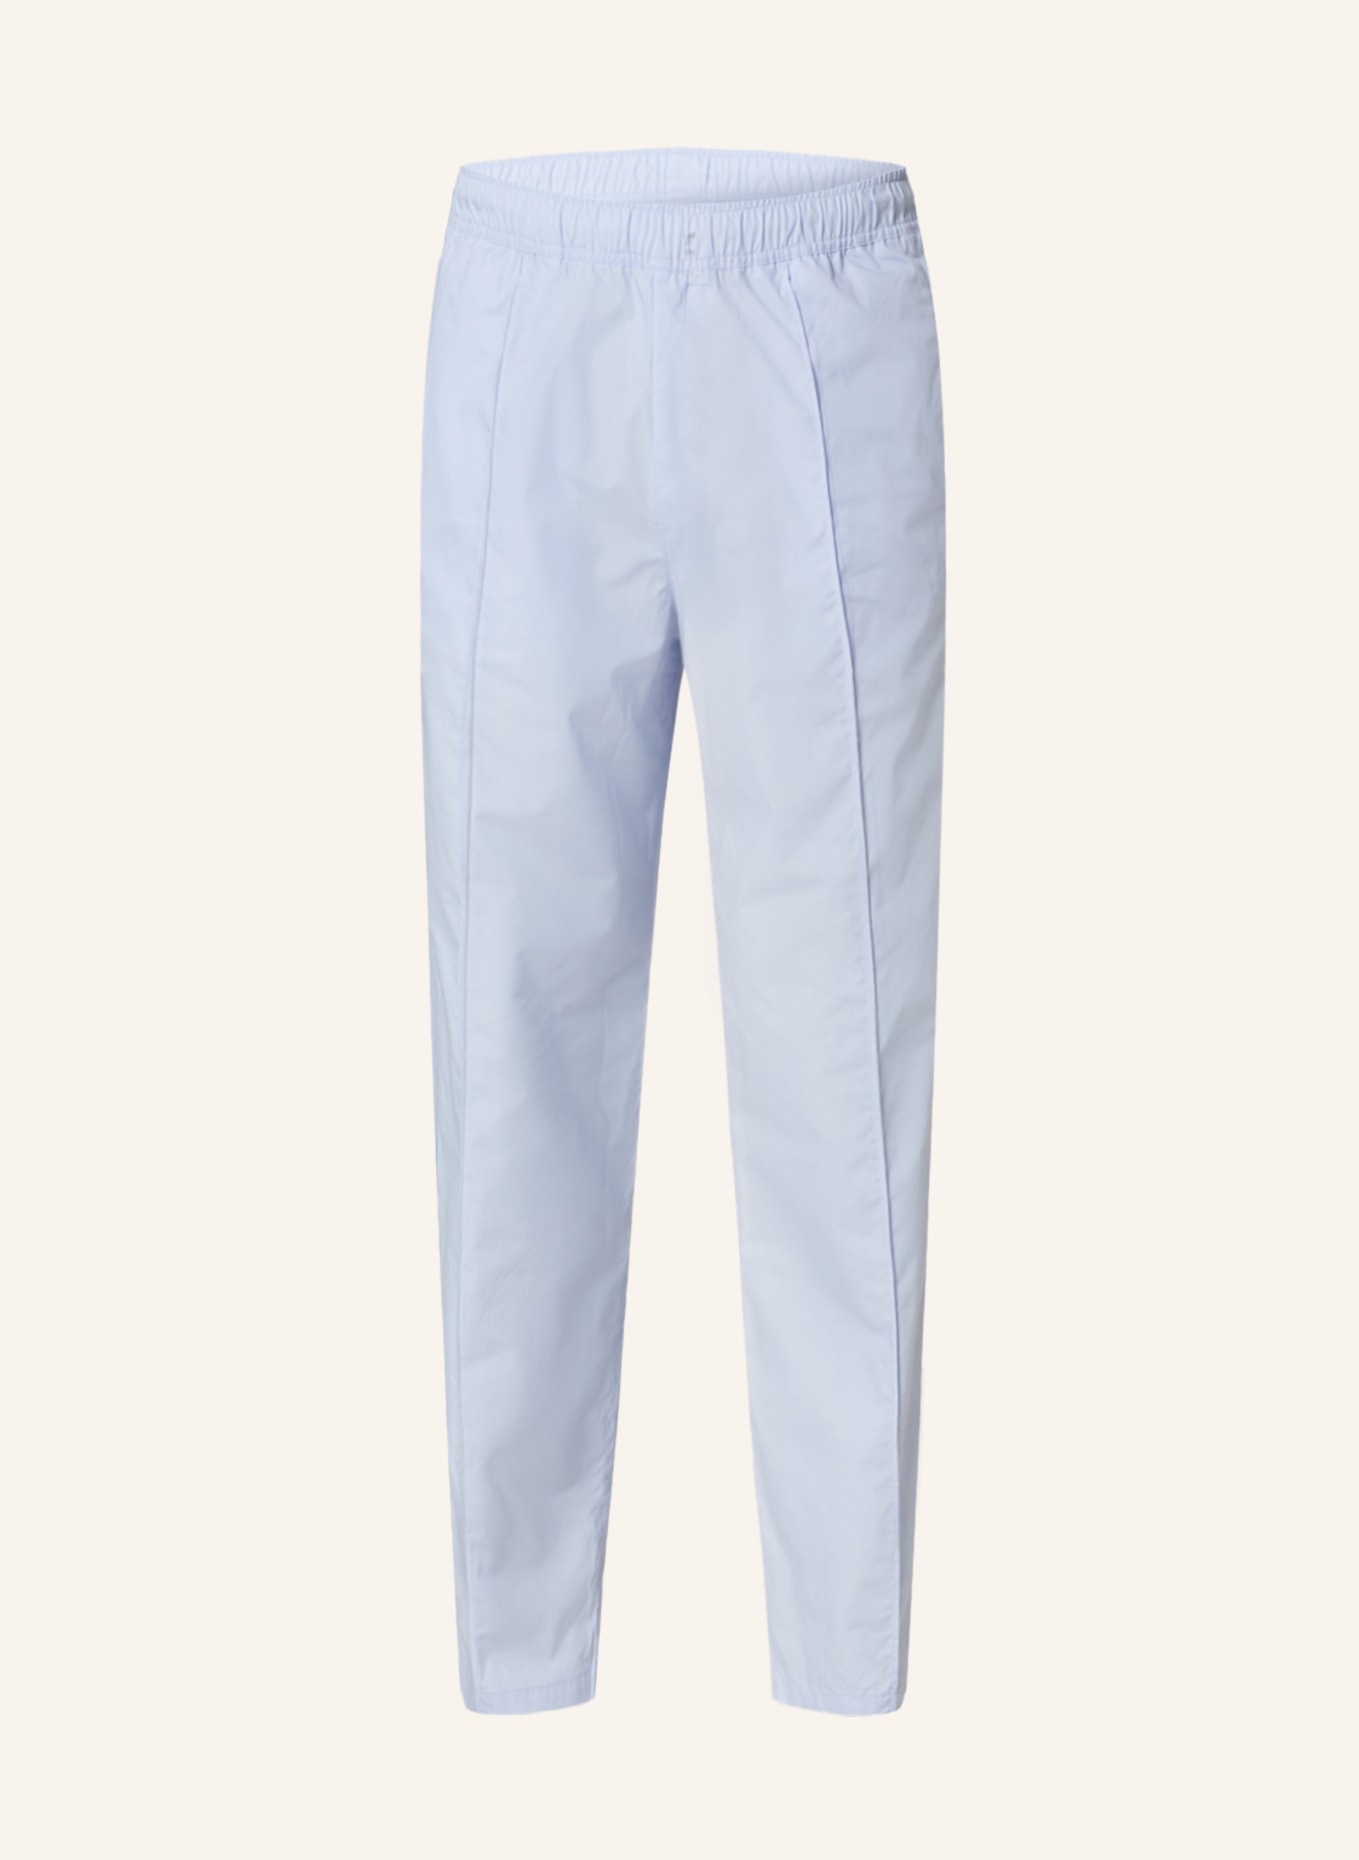 Light blue sports trousers for men and women - ADIDAS - Pavidas